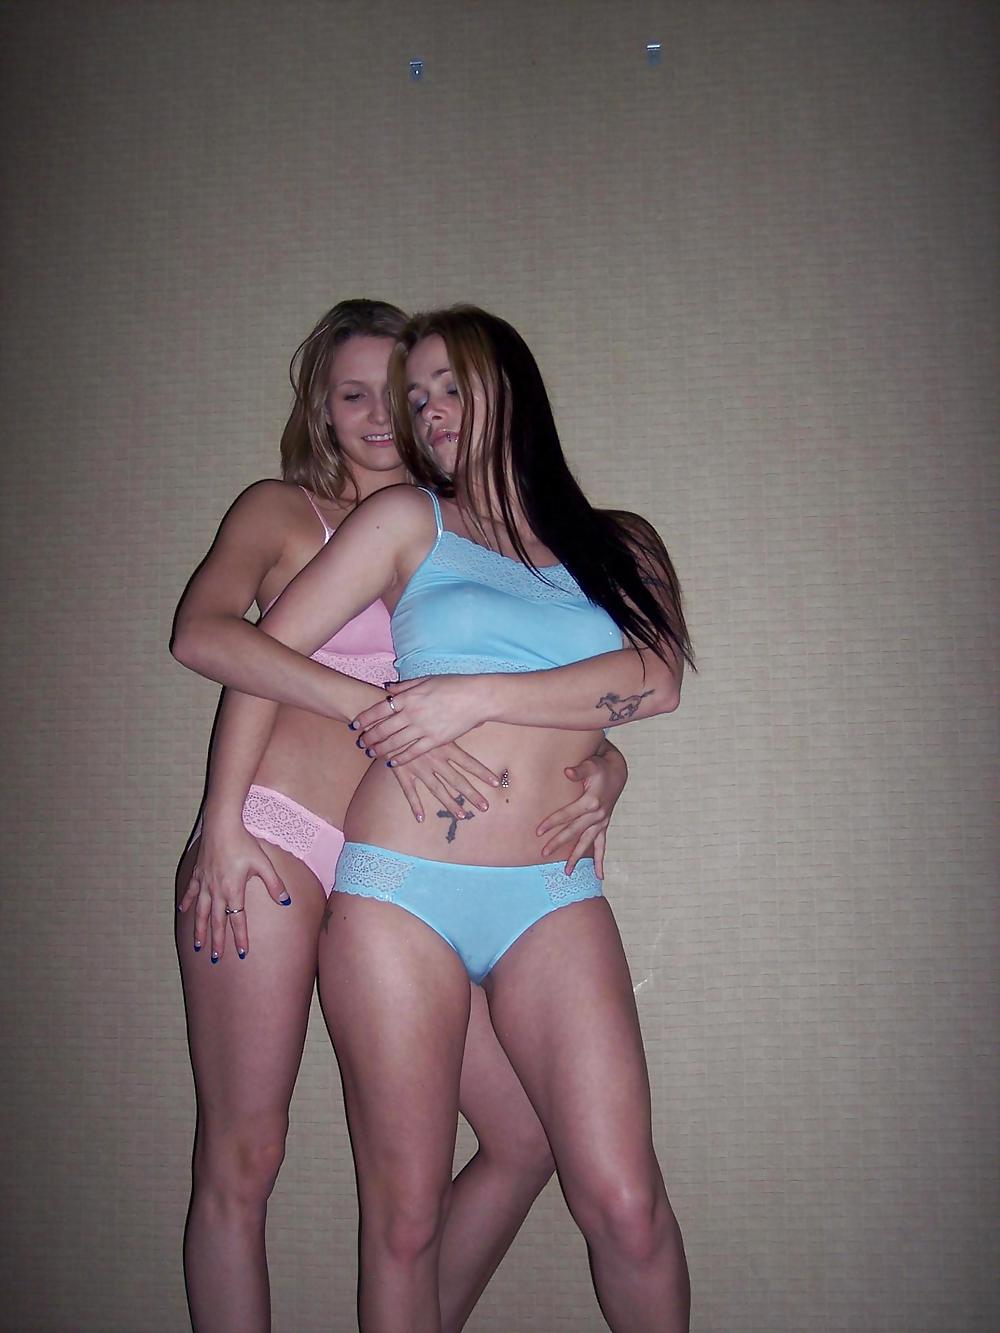 USA Teen Bitch Lesbians 001 porn pictures